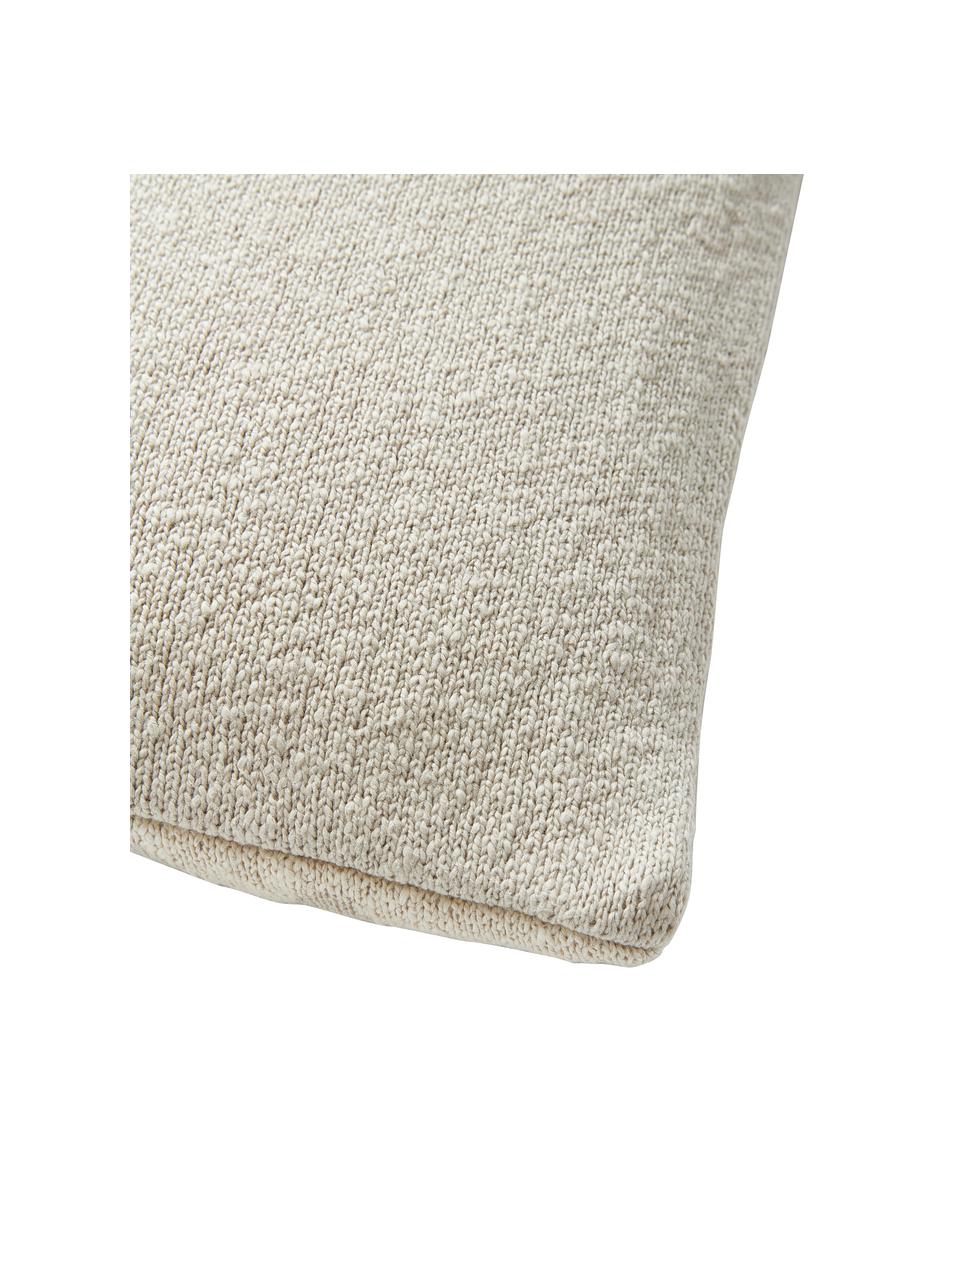 Funda de cojín bordada Anslei, 100% algodón, Beige, An 45 x L 45 cm